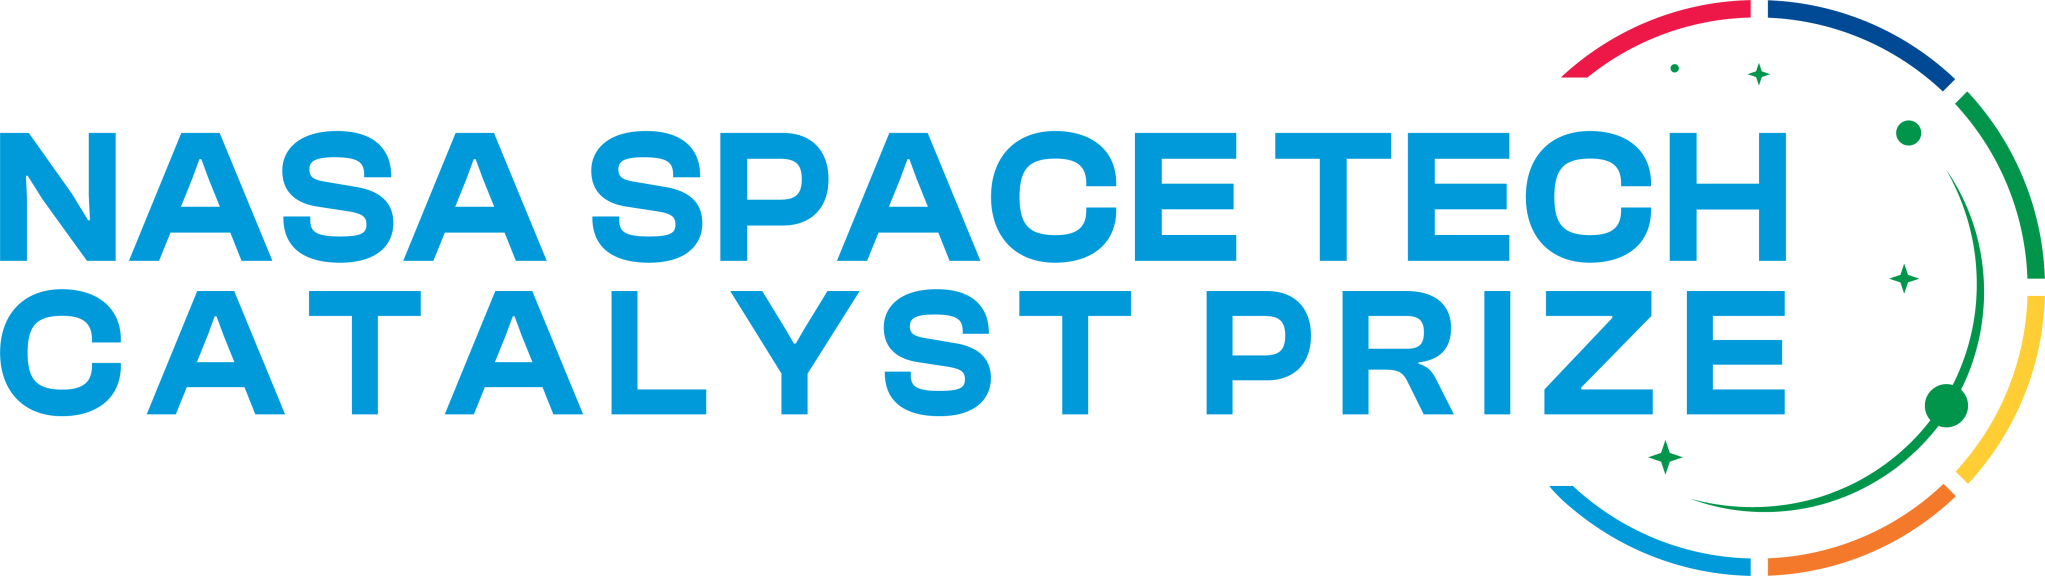 Space Tech Catalyst Prize logo